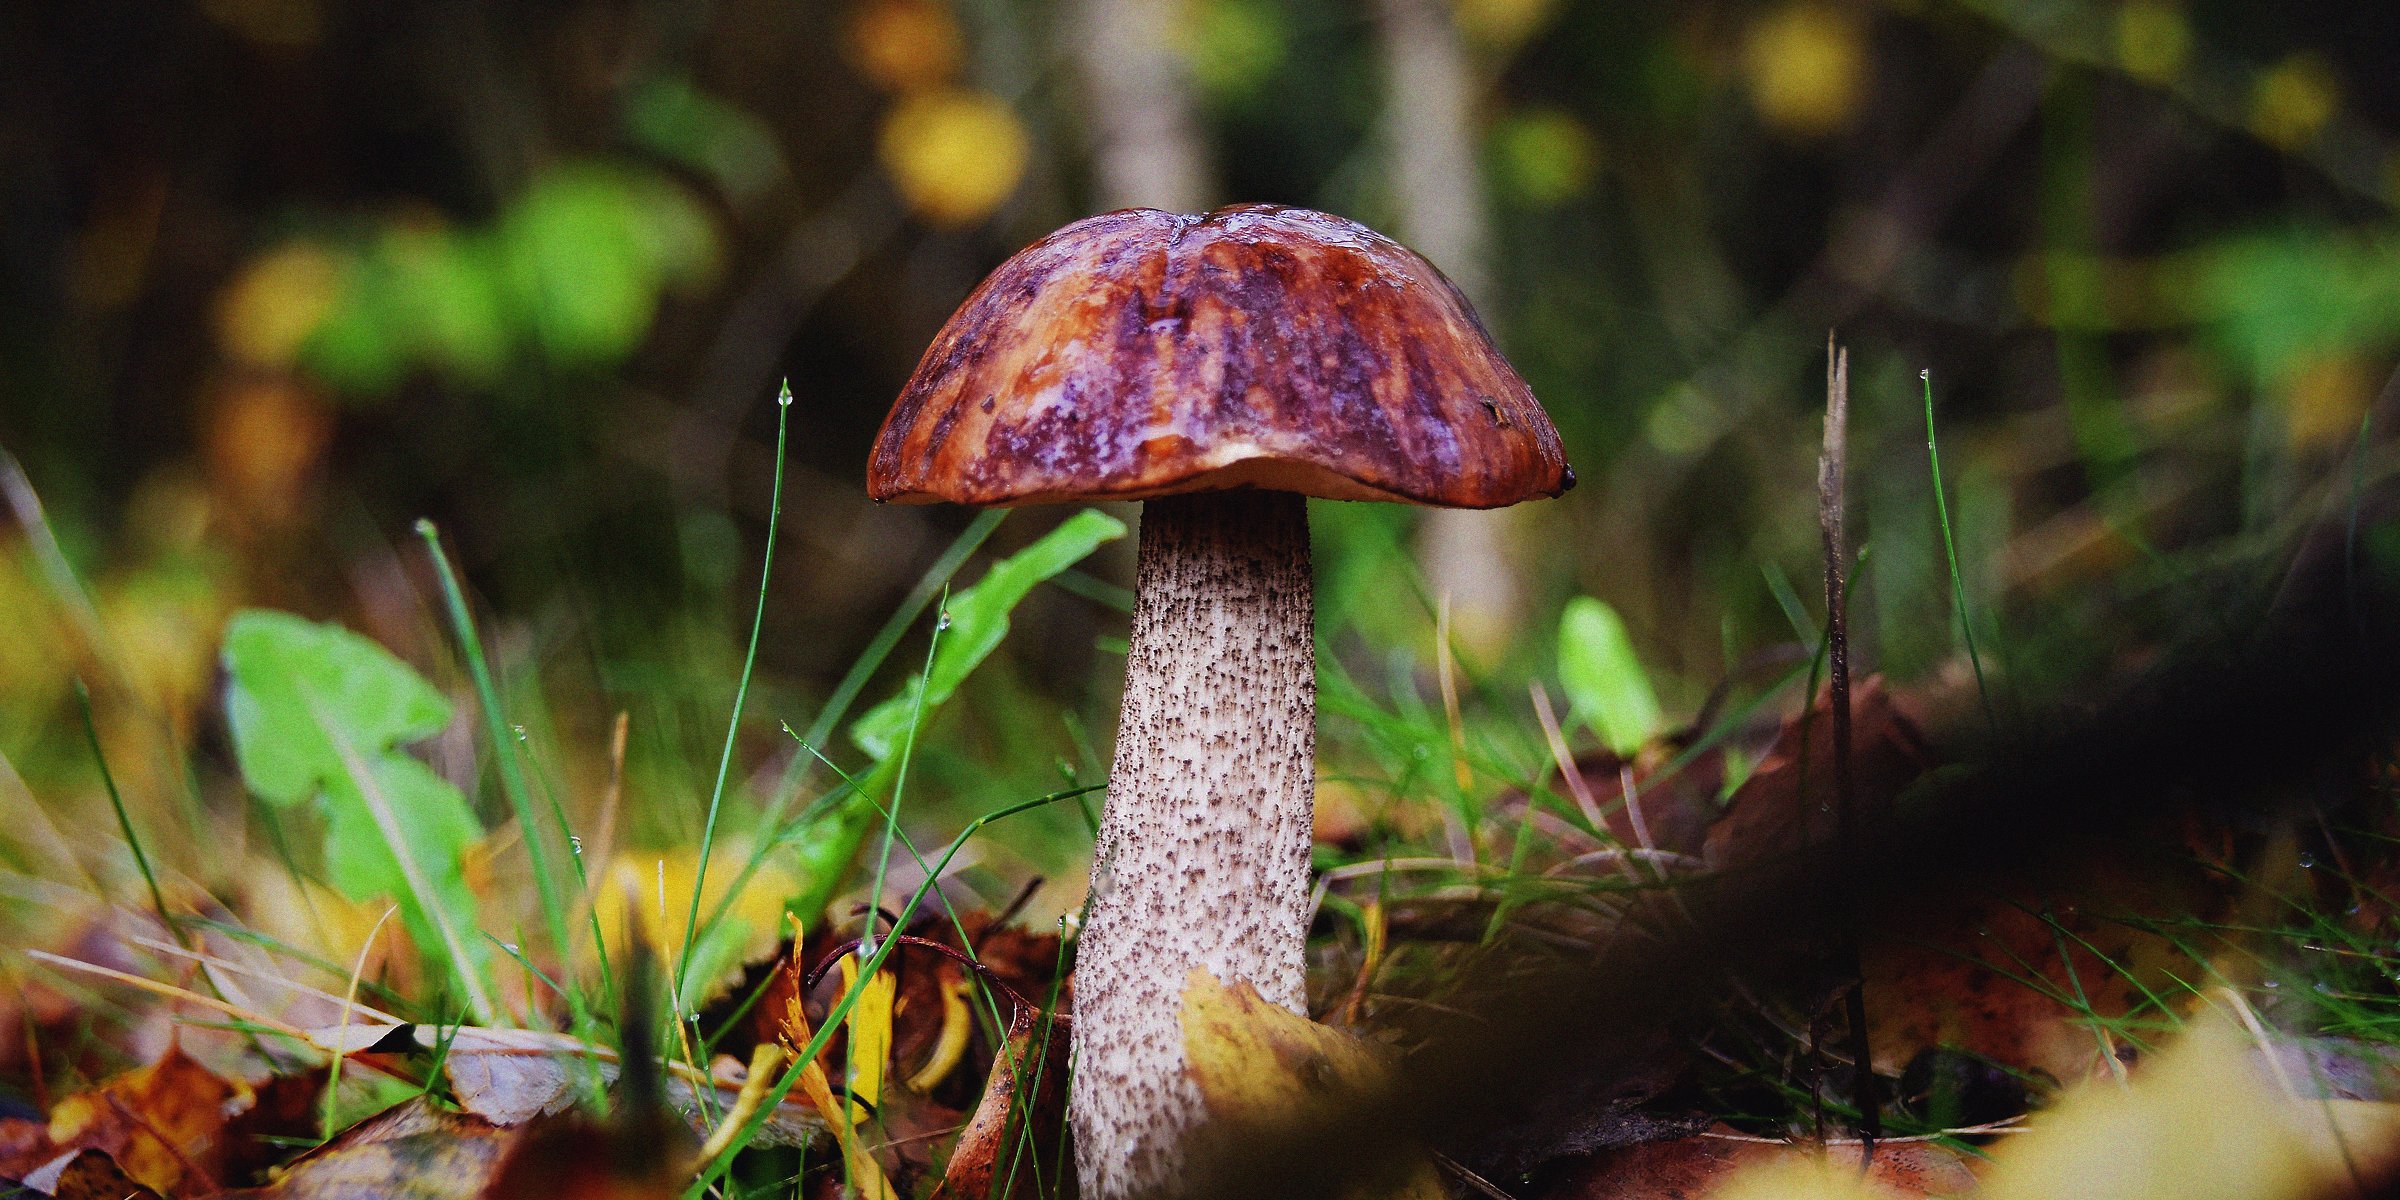 A mushroom | Source: Unsplash